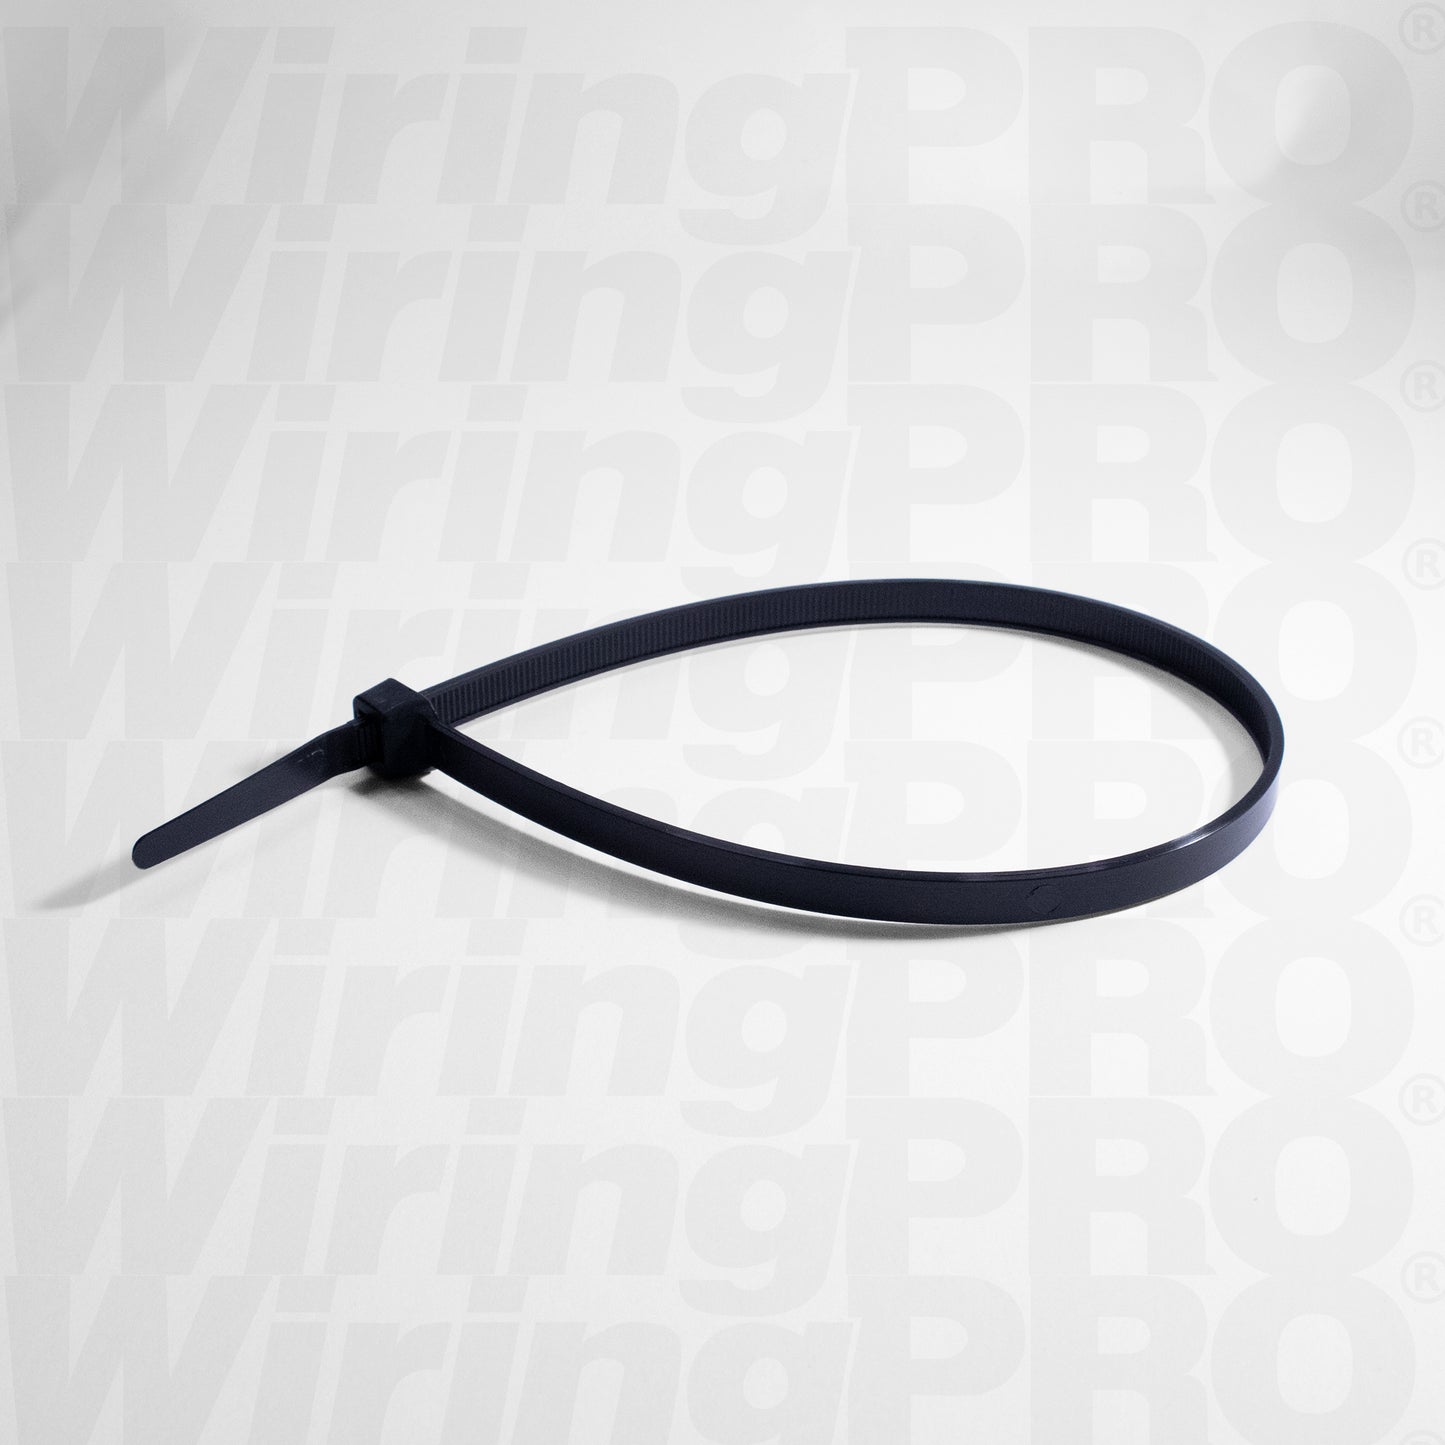 Heat Stabilized Cable Ties - UV Black Nylon